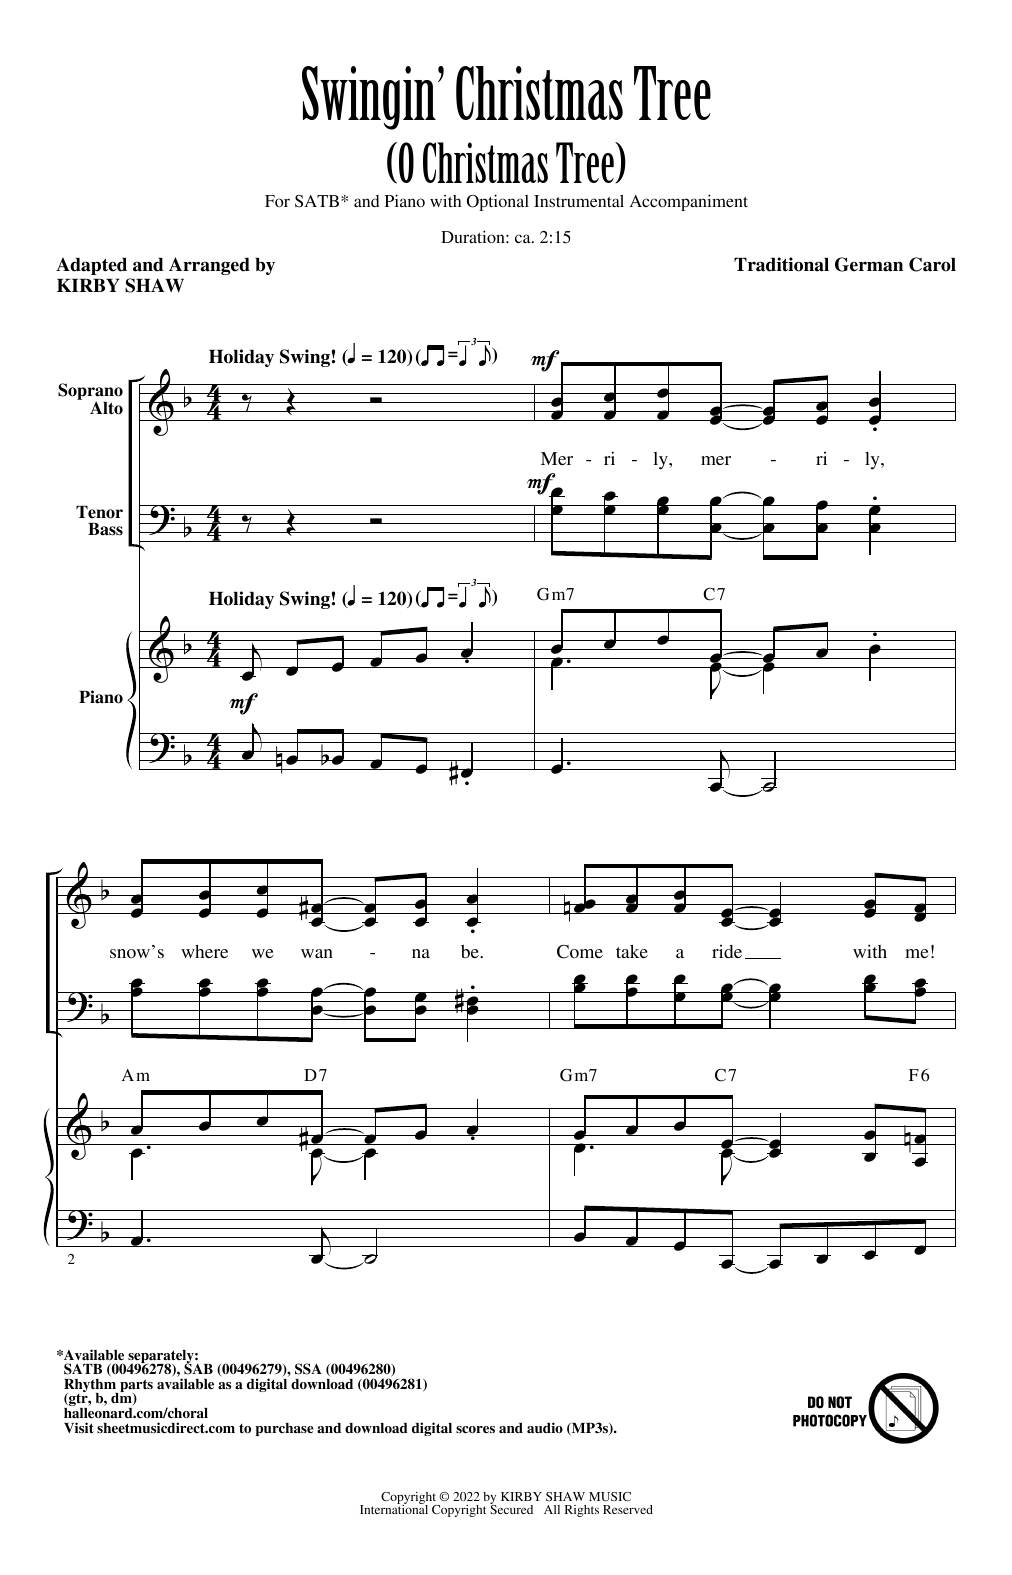 Traditional German Carol Swingin' Christmas Tree (O Christmas Tree) (arr. Kirby Shaw) Sheet Music Notes & Chords for SATB Choir - Download or Print PDF